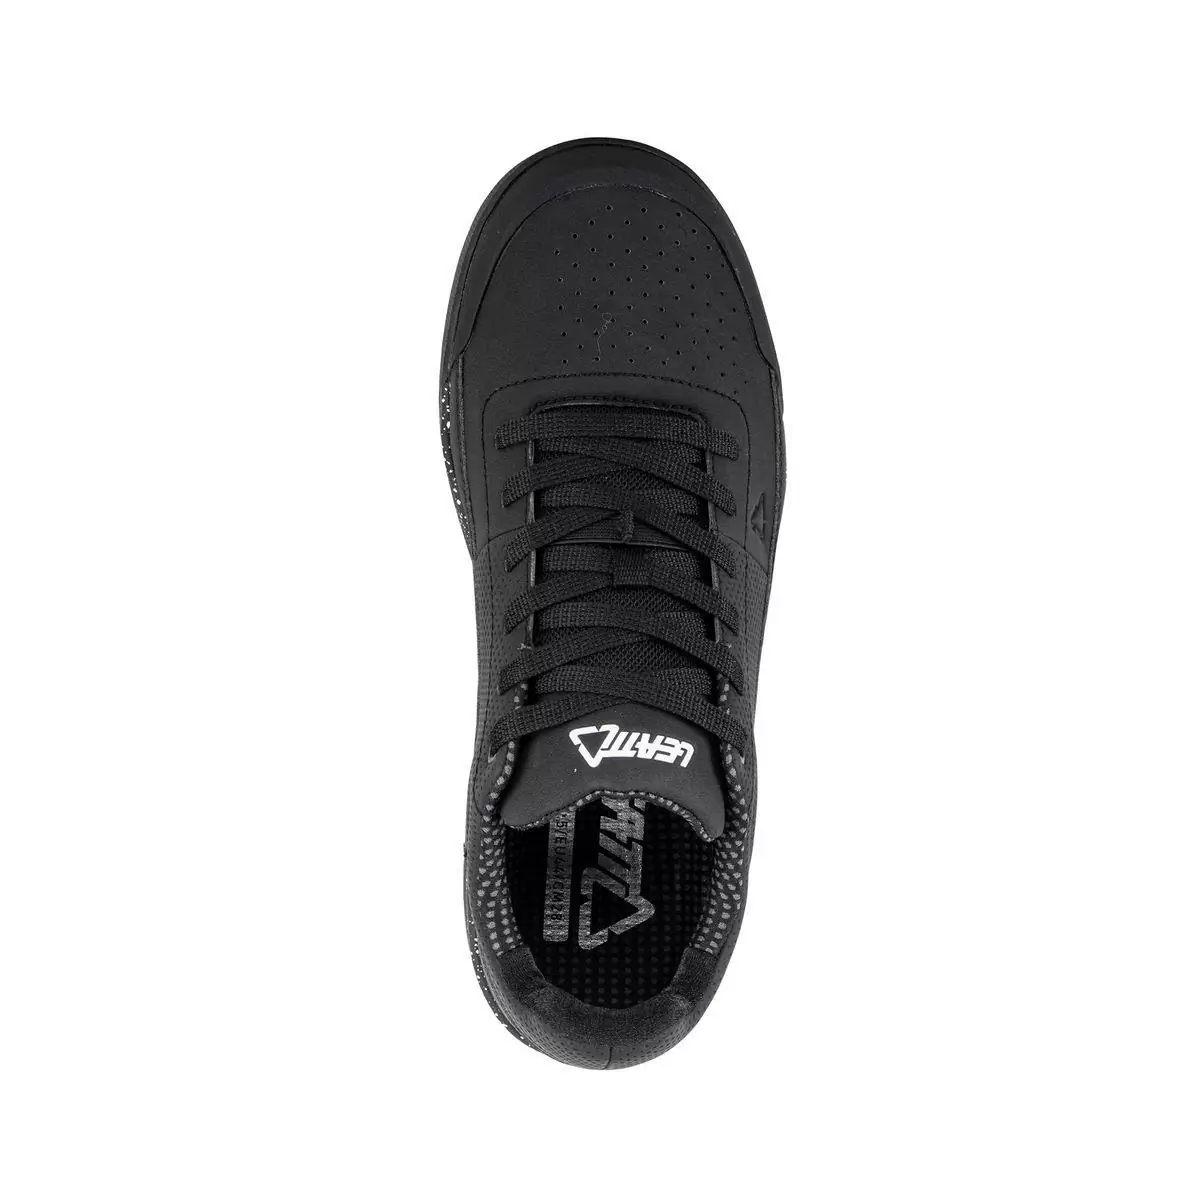 Mtb Shoes 2.0 Flat Black Size 45.5 #2